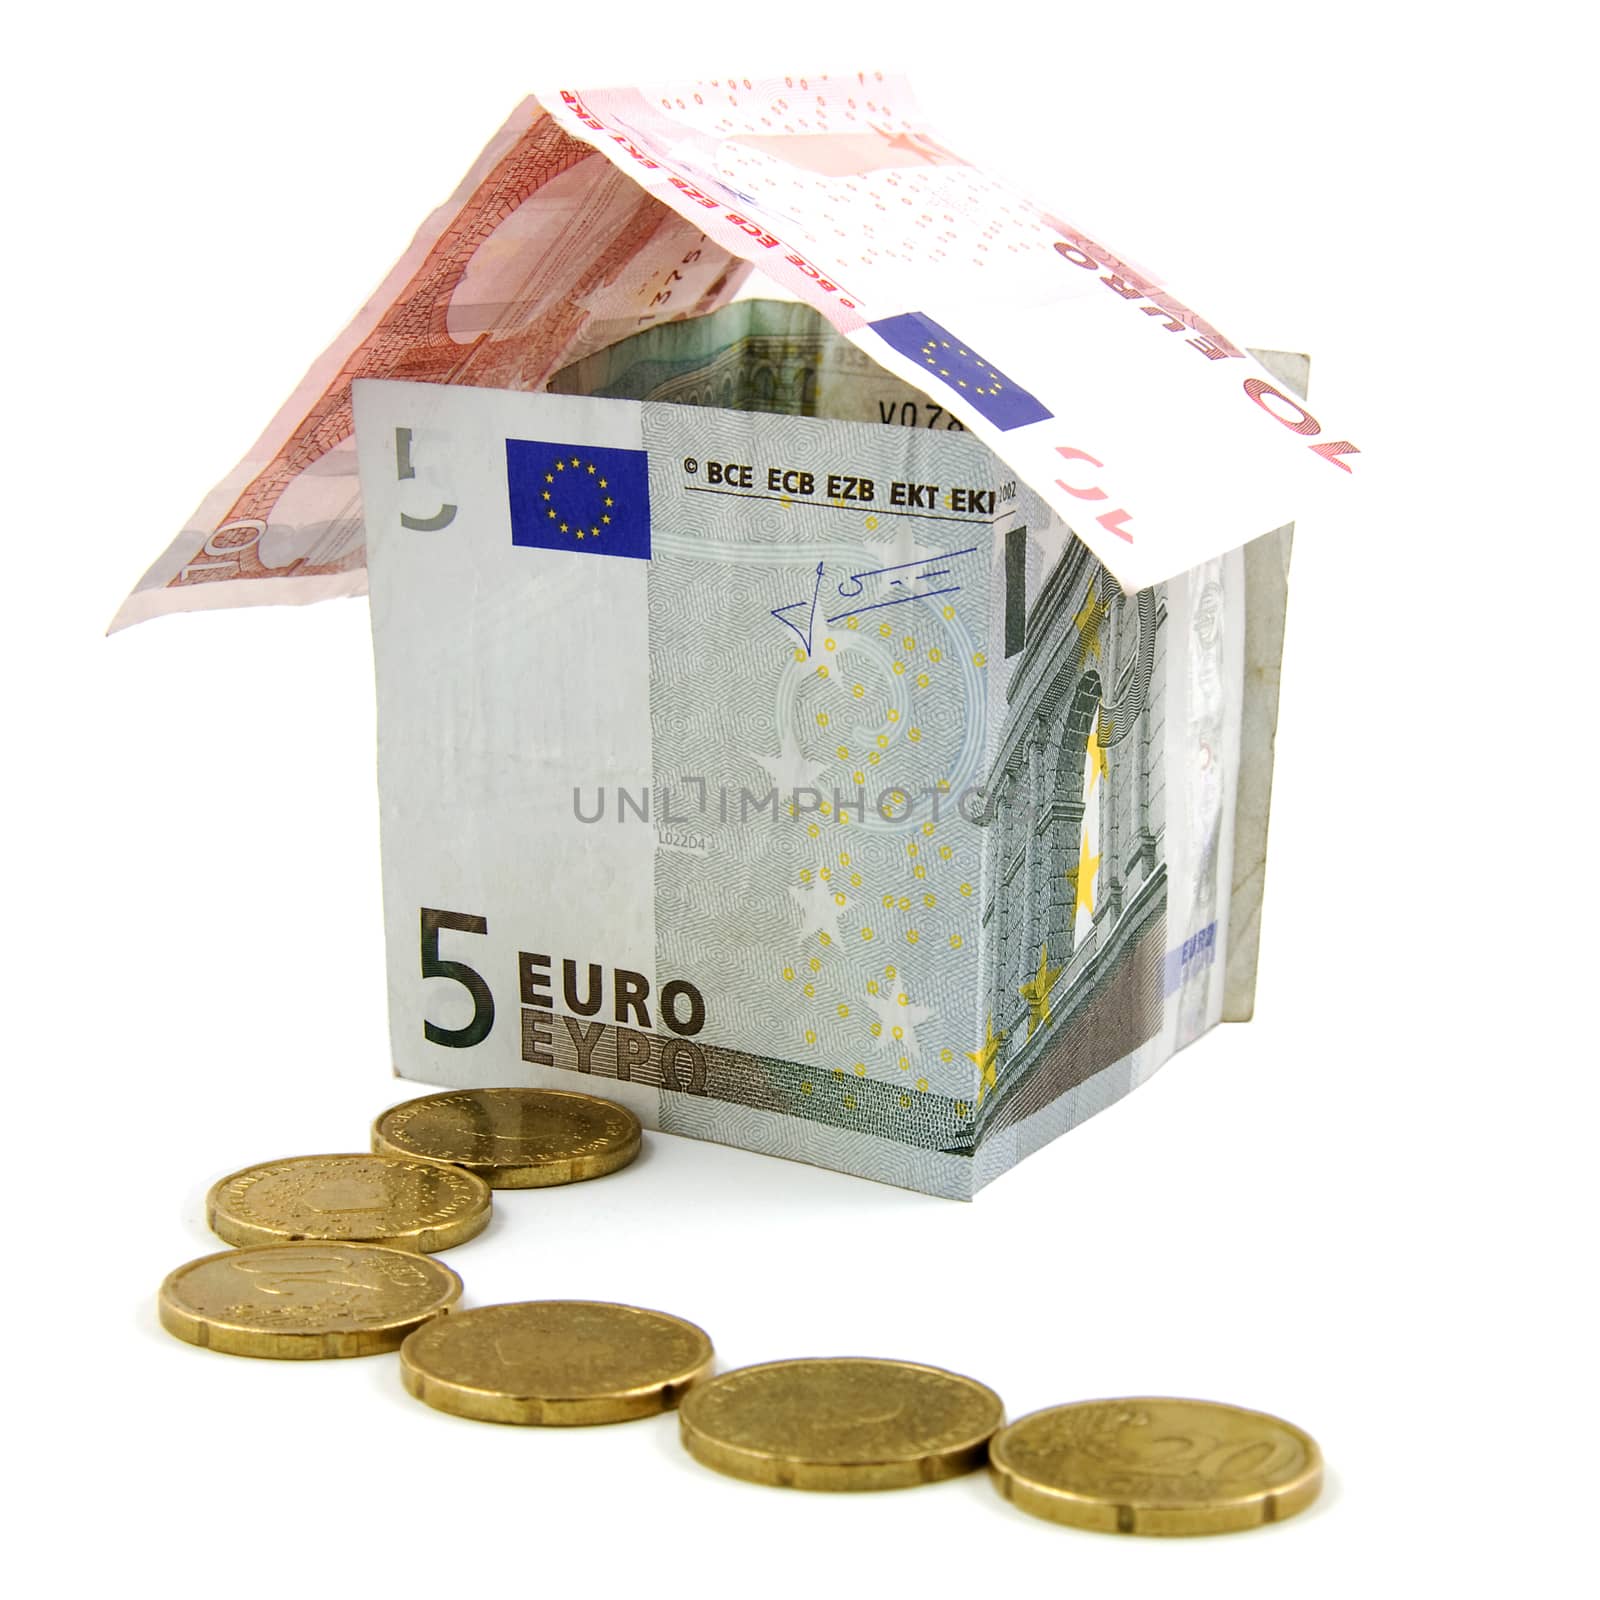 House made of Euro biljets over white background